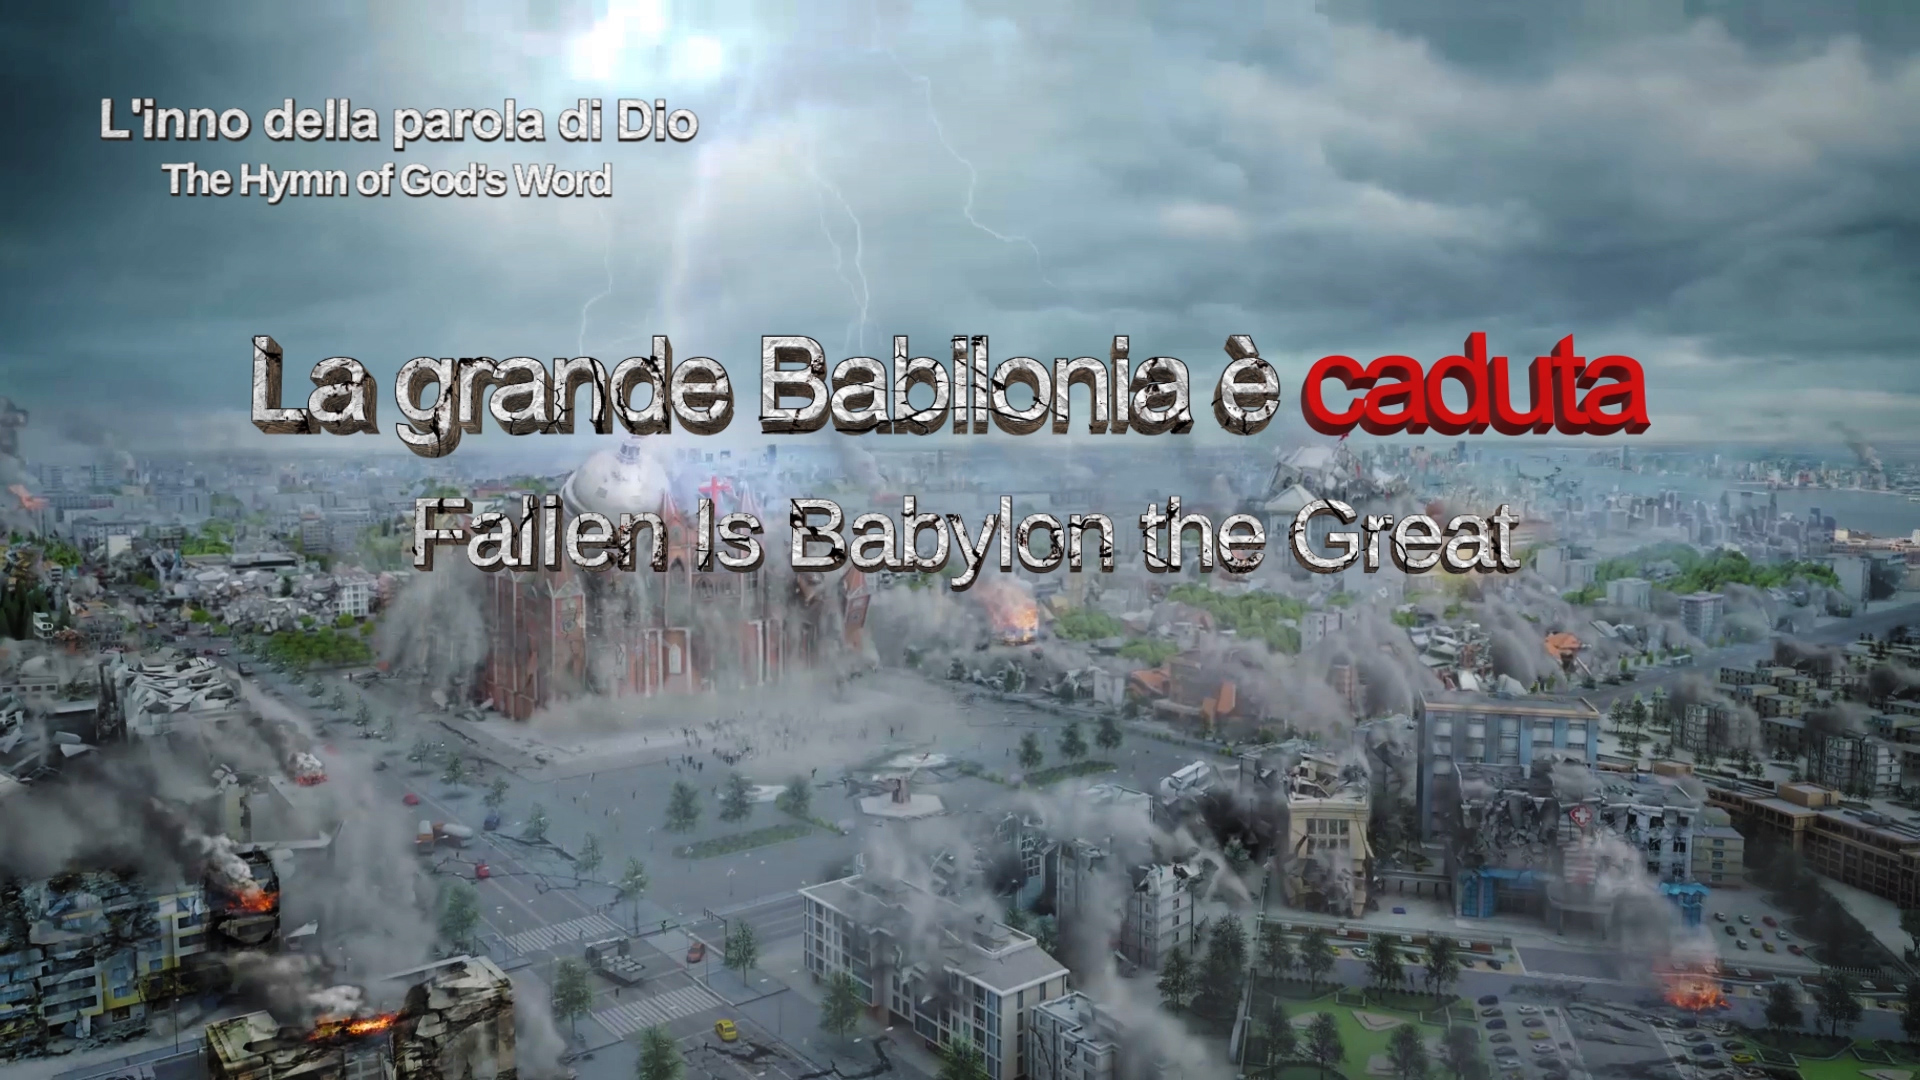 La grande Babilonia è caduta